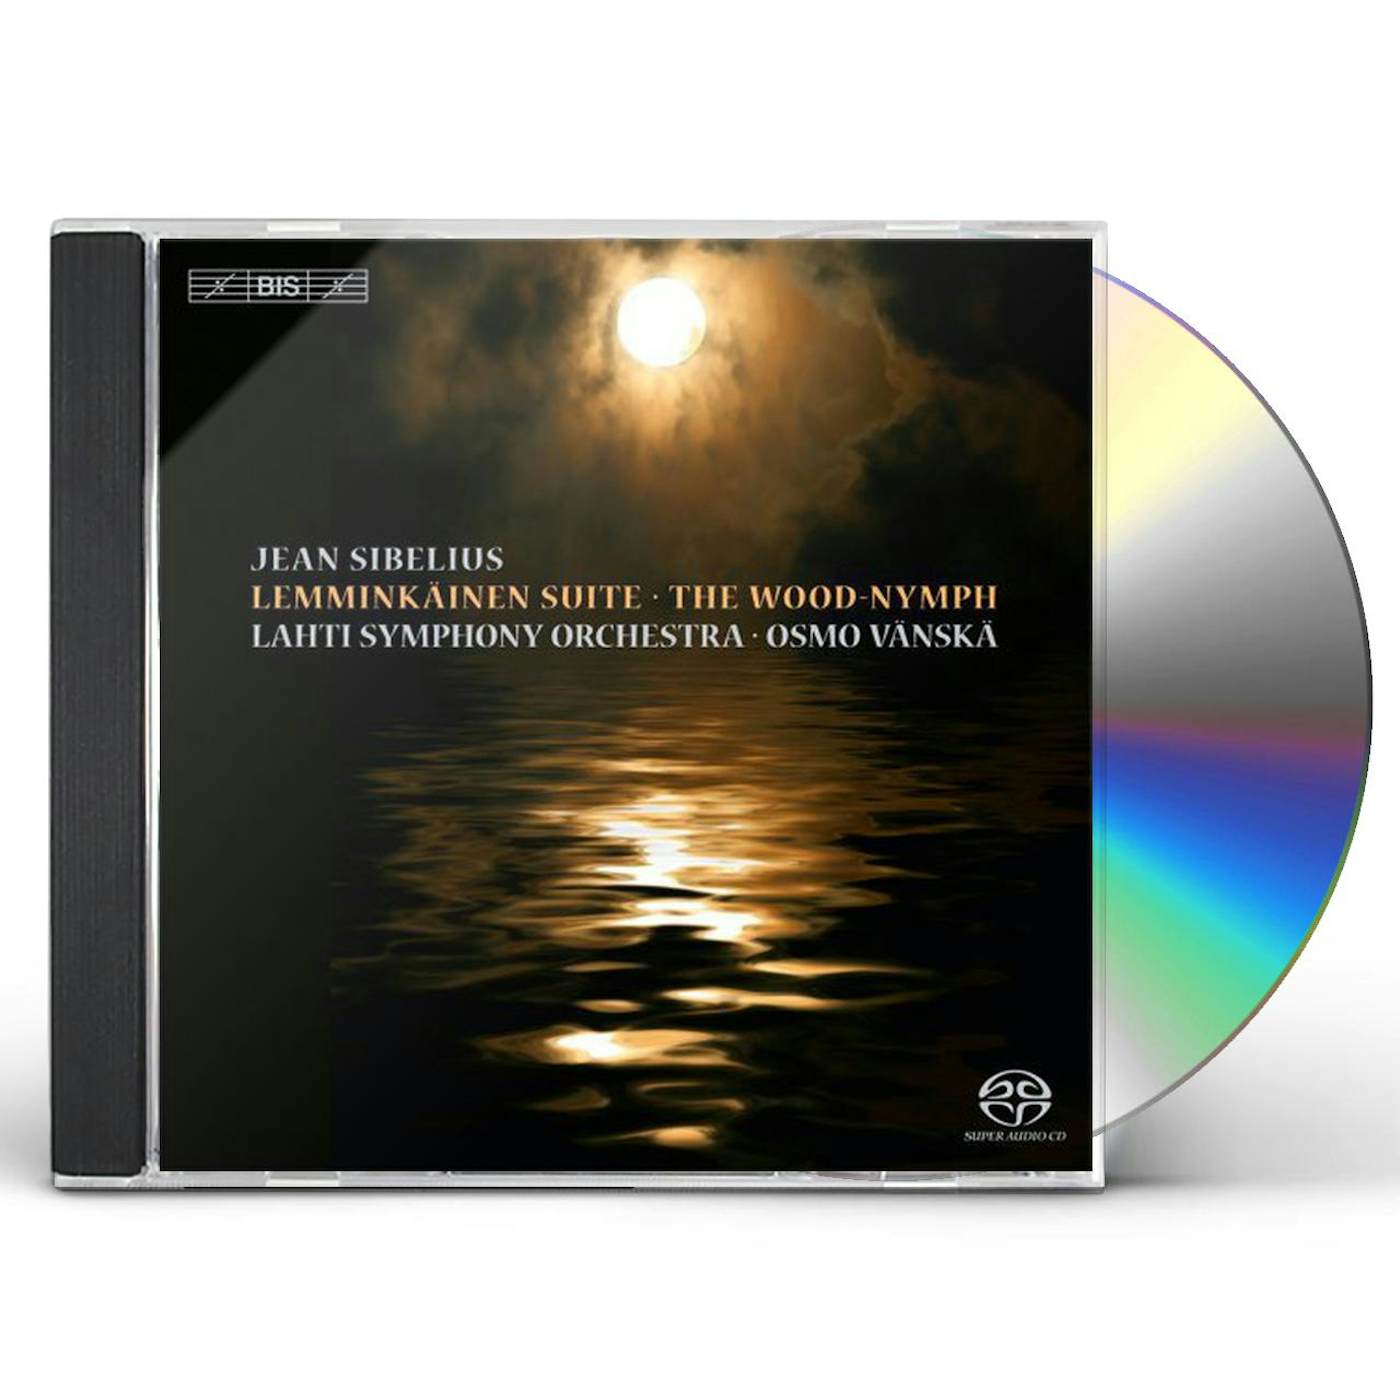 Sibelius LEMMINKAINEN SUITE & THE WOOD-NYMPH CD